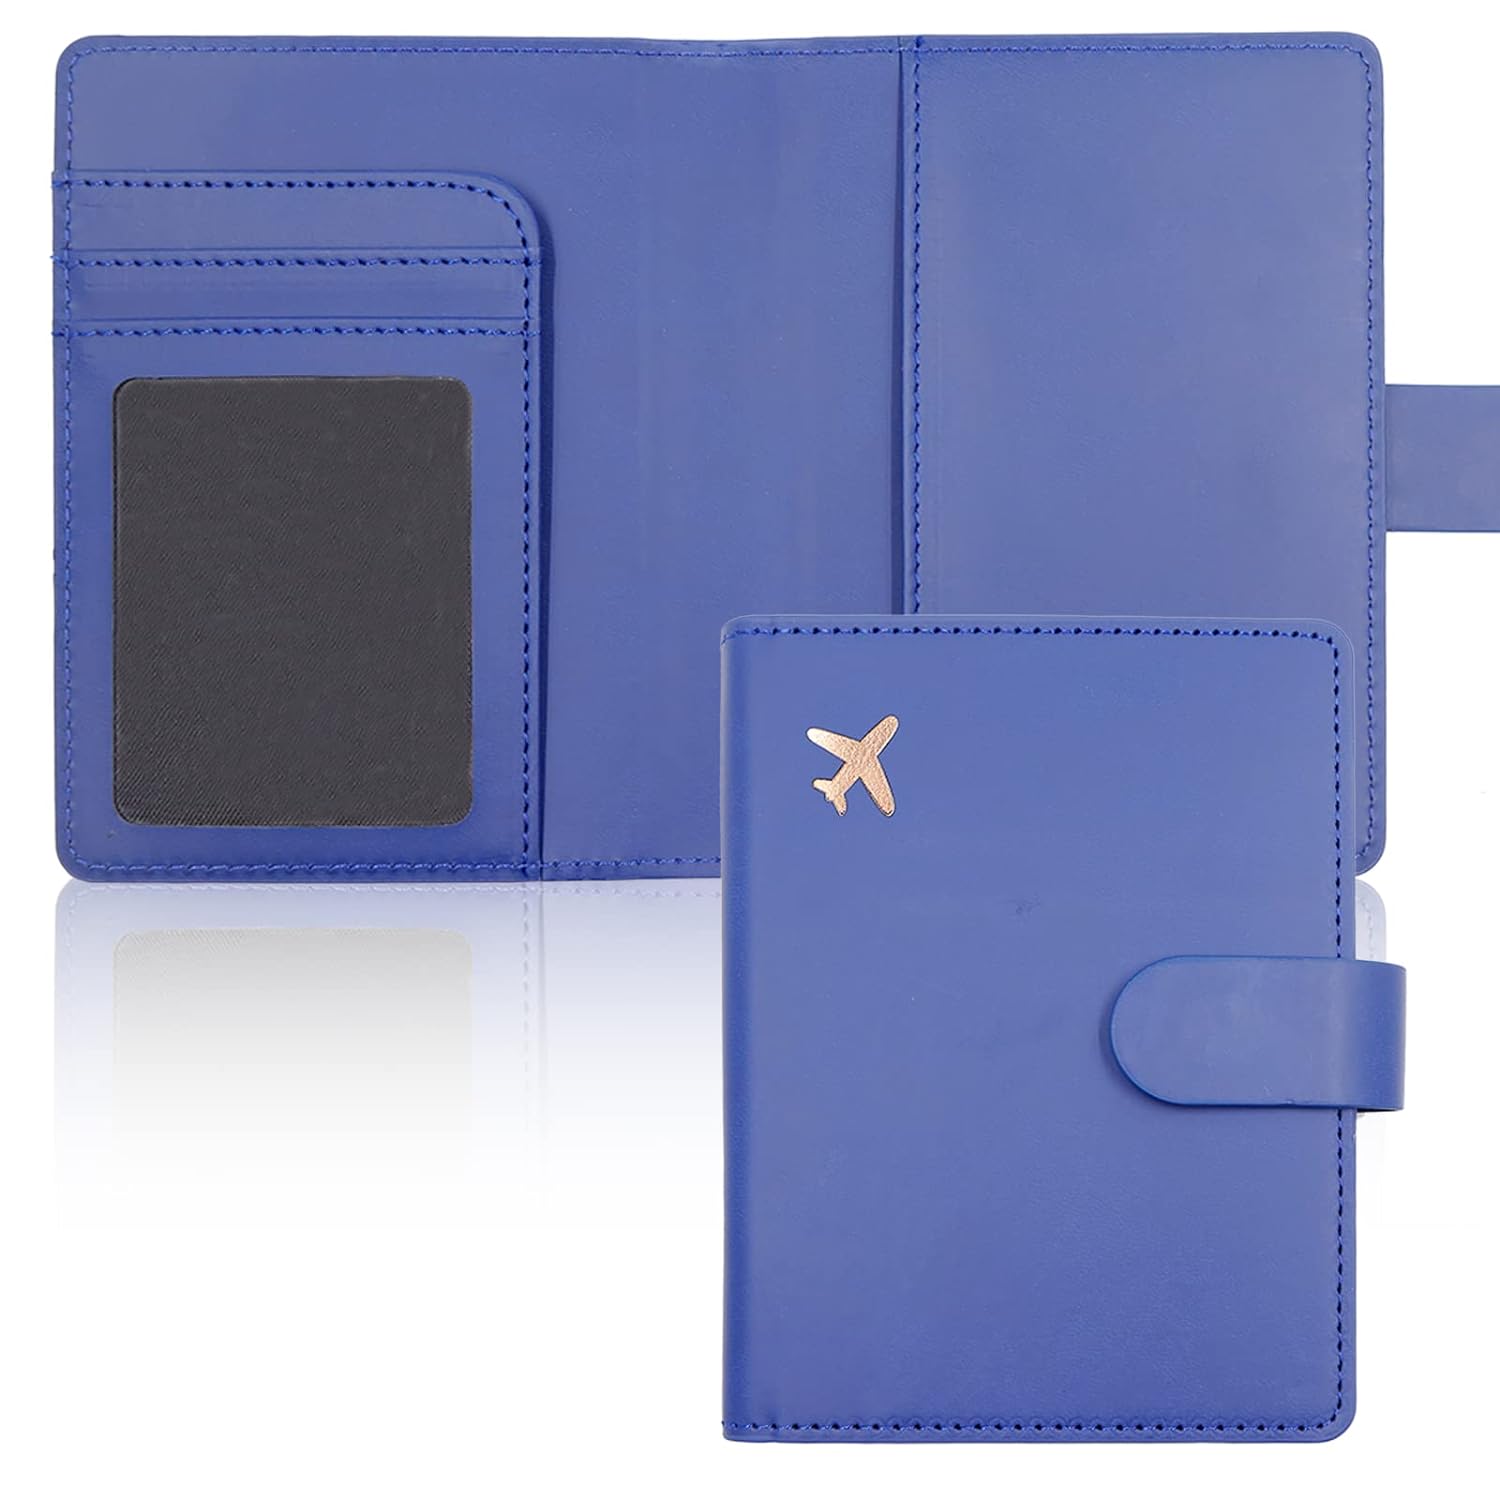 Deziliao Passport and Vaccine Card Holder Combo, PU Leather Passport Holder with Vaccine Card Slot, Passport Wallet for Men and Women, Blue, Classic